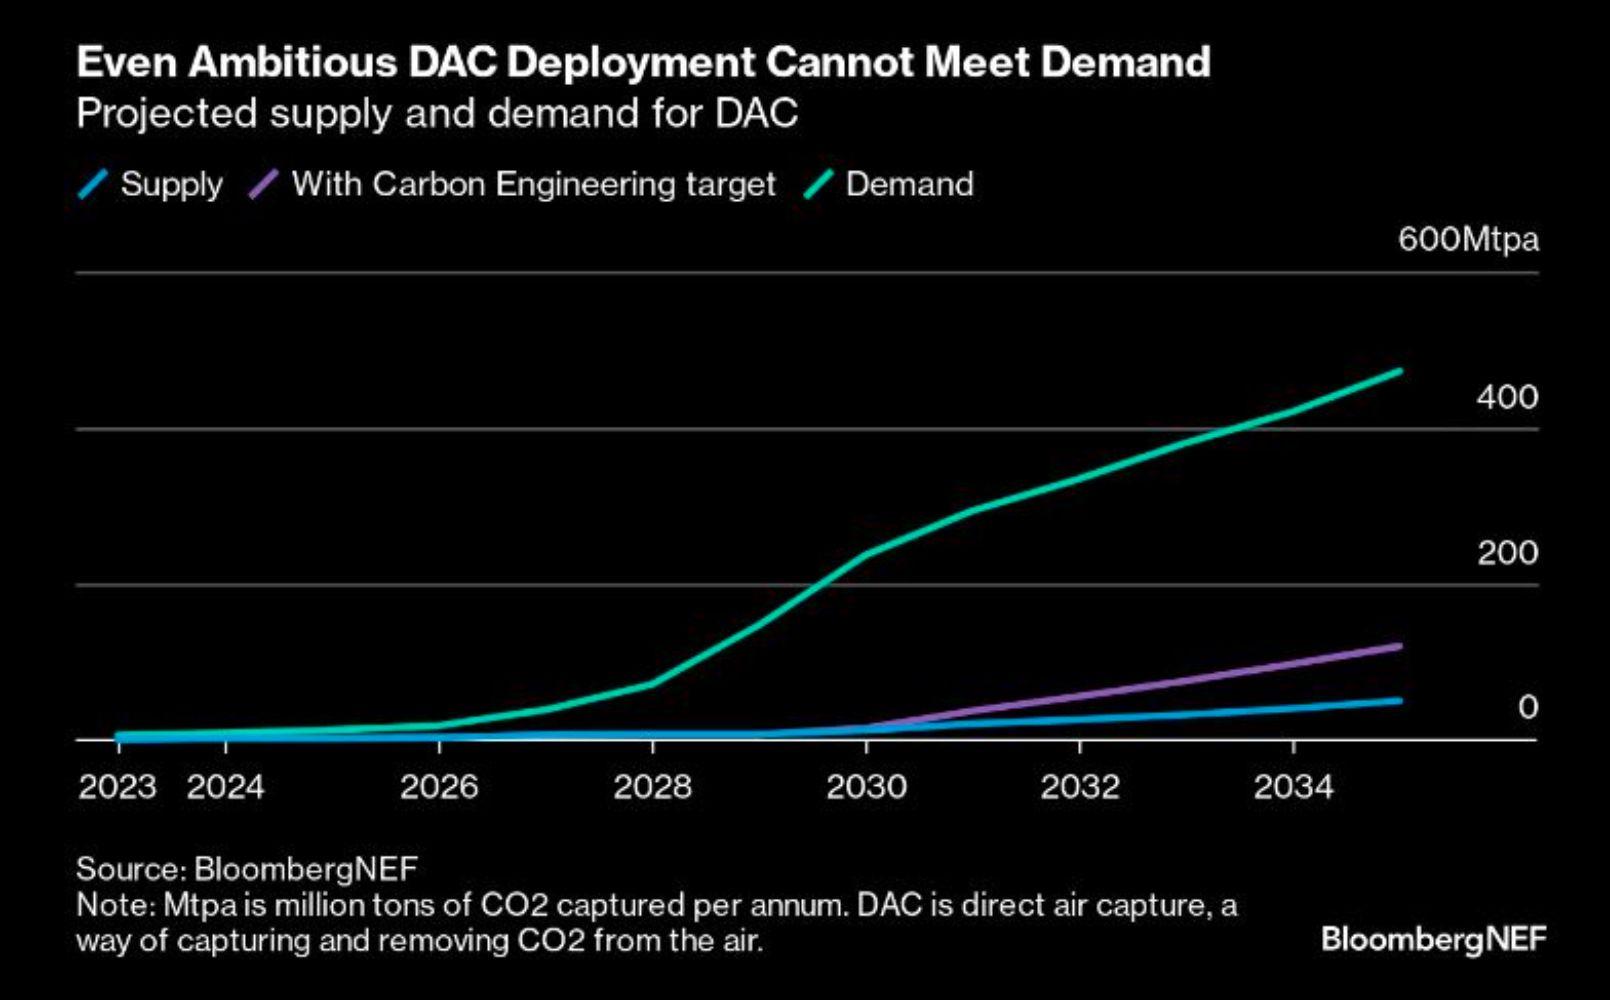 DAC deployment vs demand